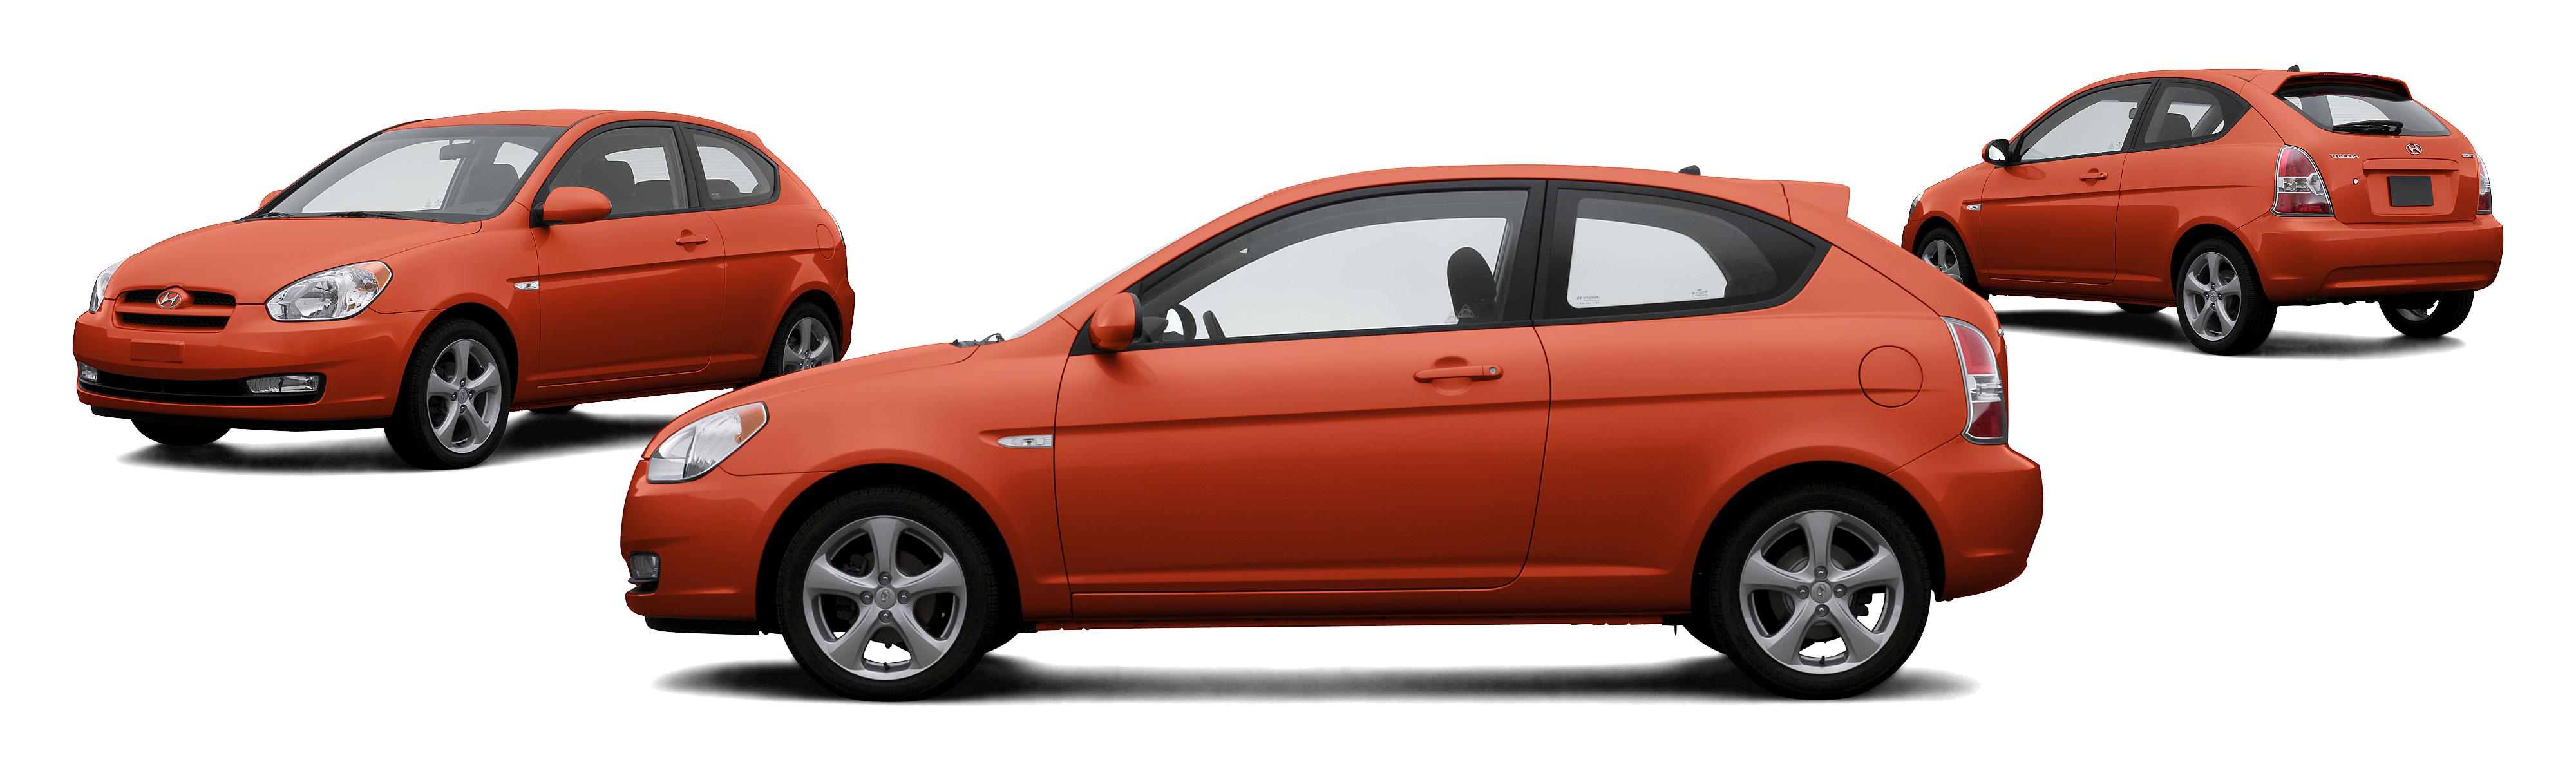 2007 Hyundai Accent SE 2dr Hatchback (1.6L I4 4A) - Research - GrooveCar